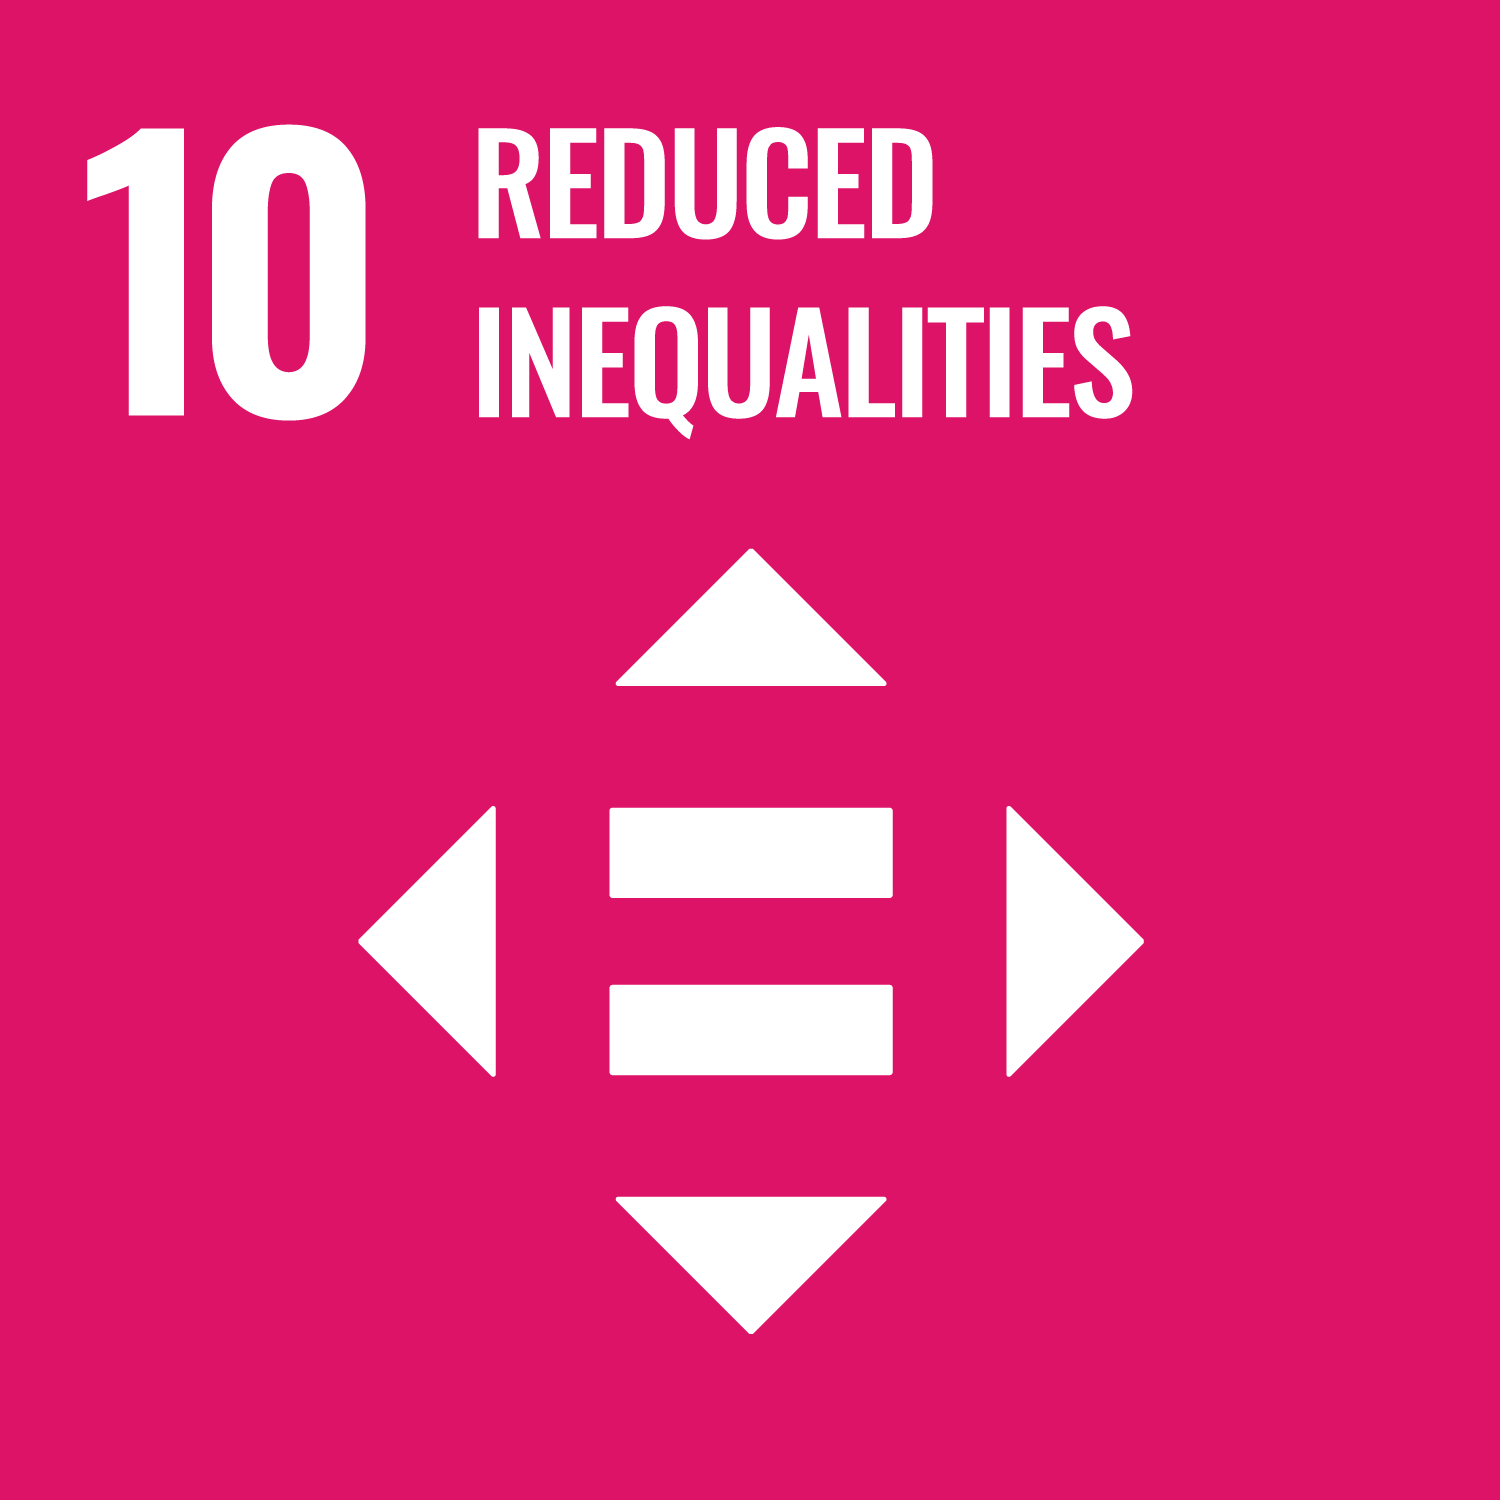 sustainable-development-goals-reduced-inequalities